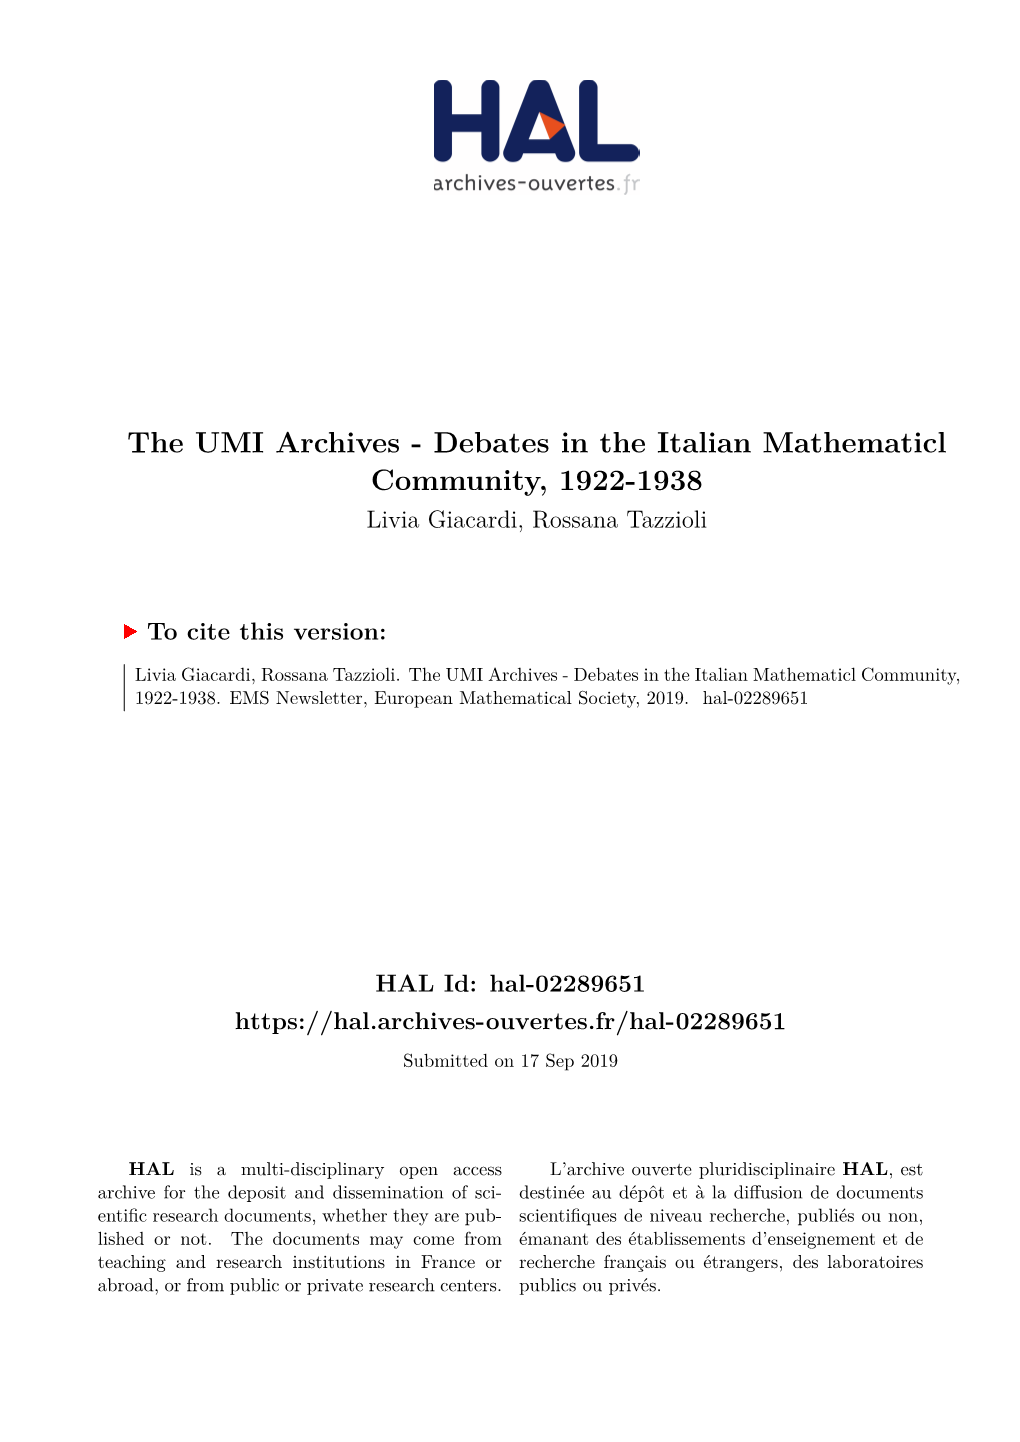 Debates in the Italian Mathematicl Community, 1922-1938 Livia Giacardi, Rossana Tazzioli